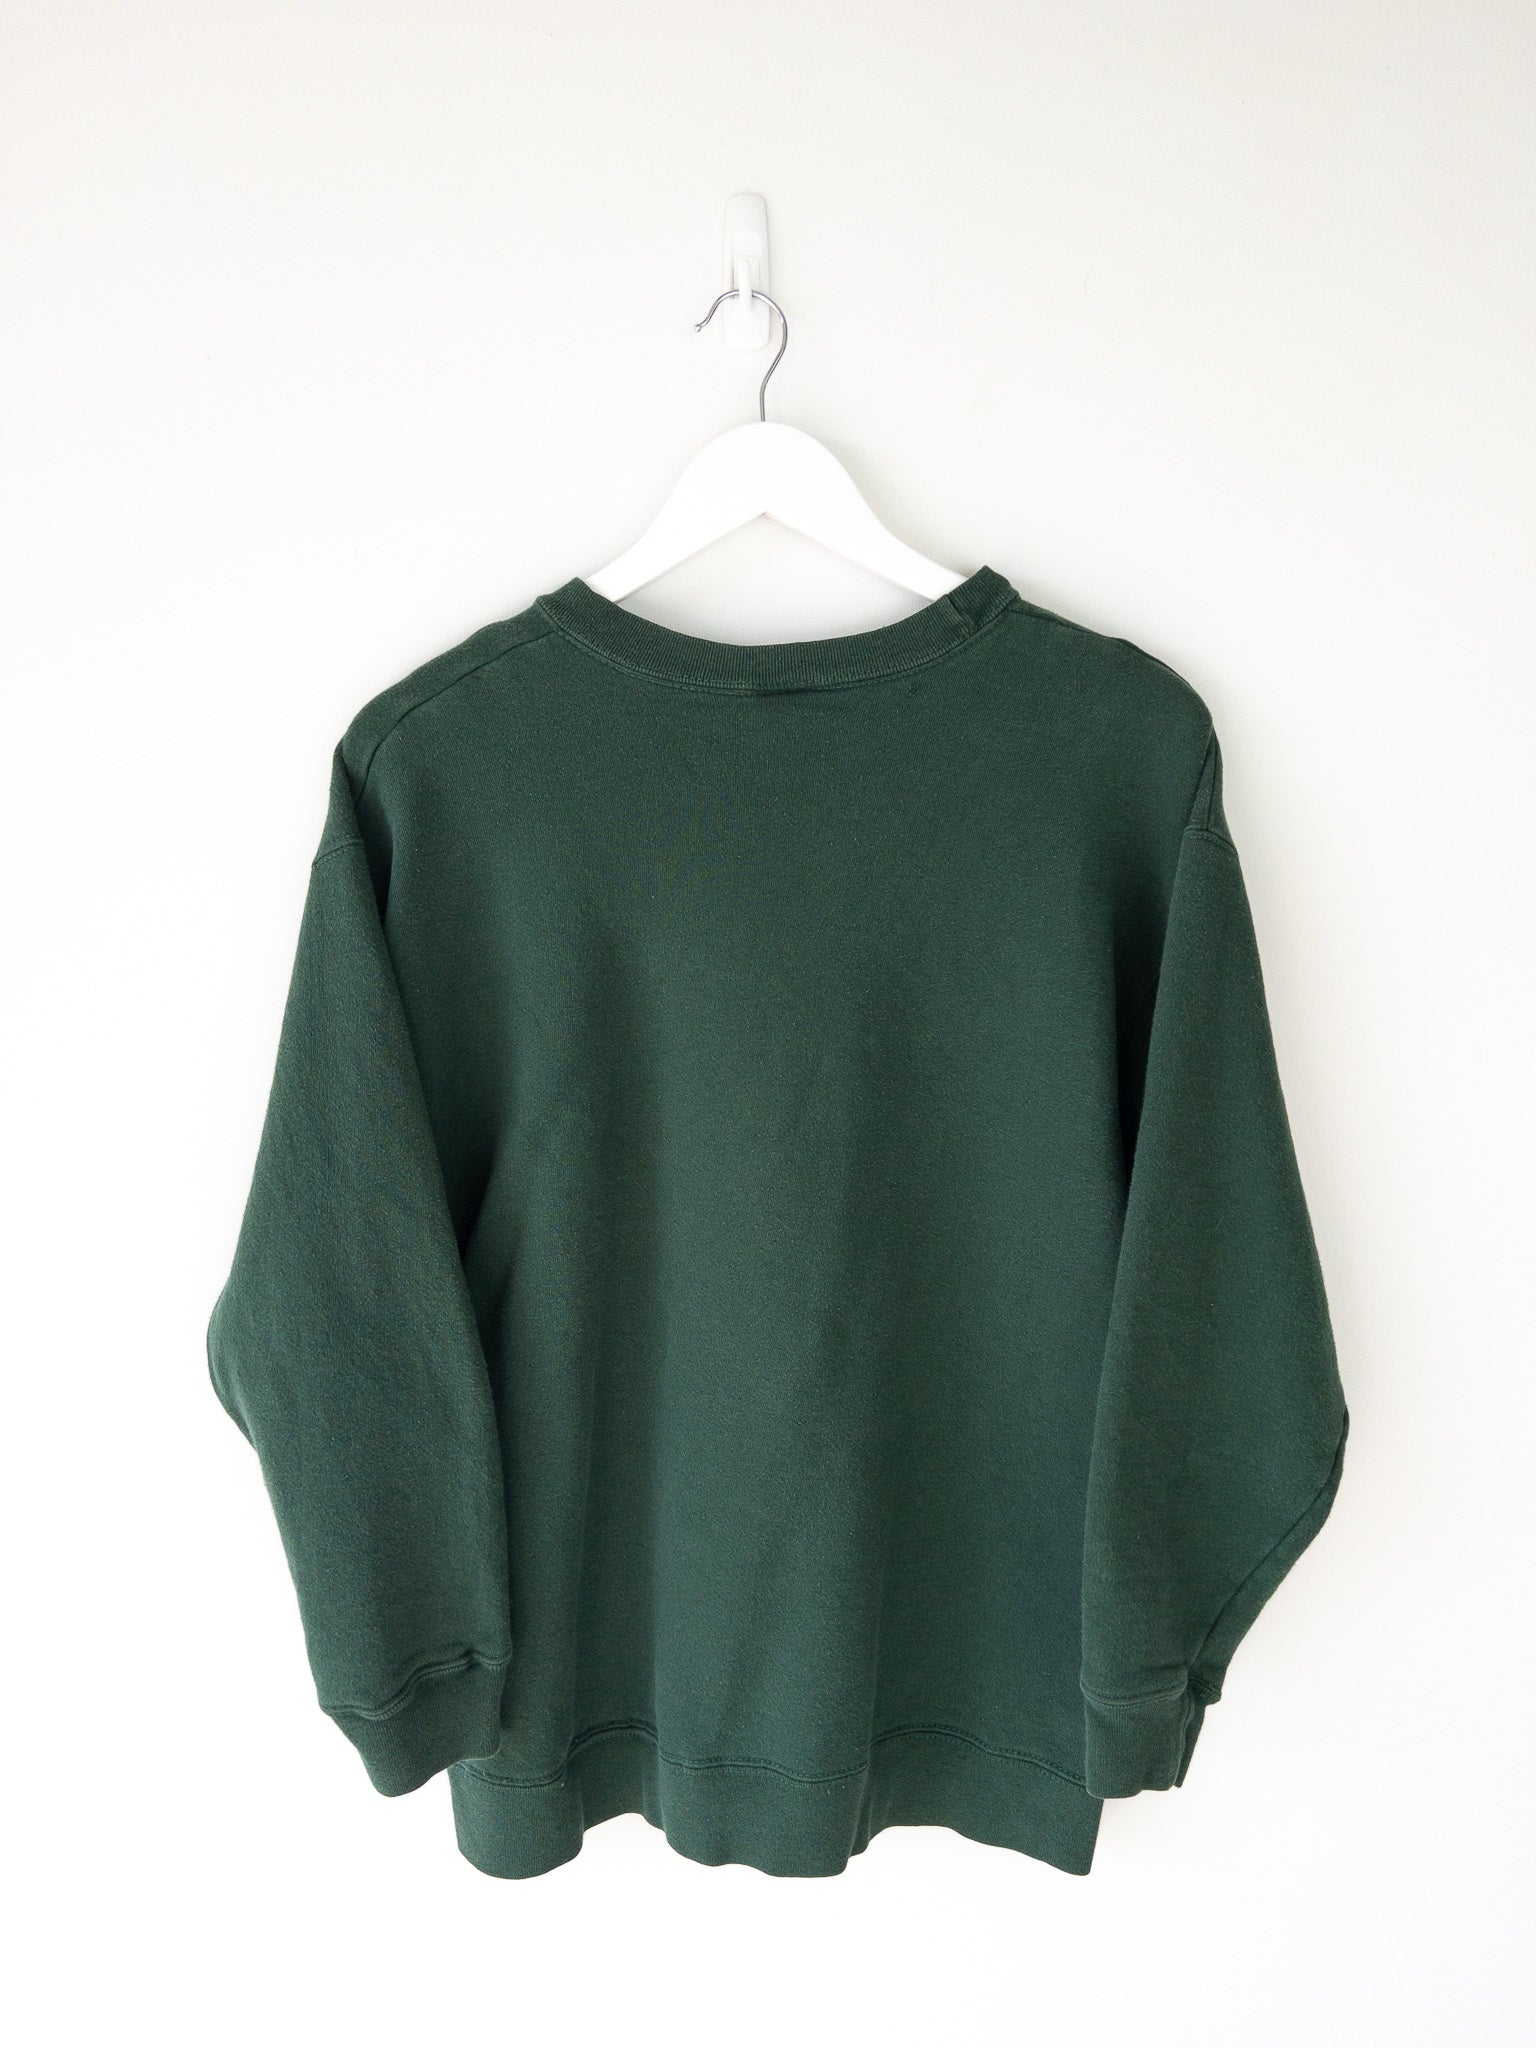 Vintage Guess Sweatshirt (M)